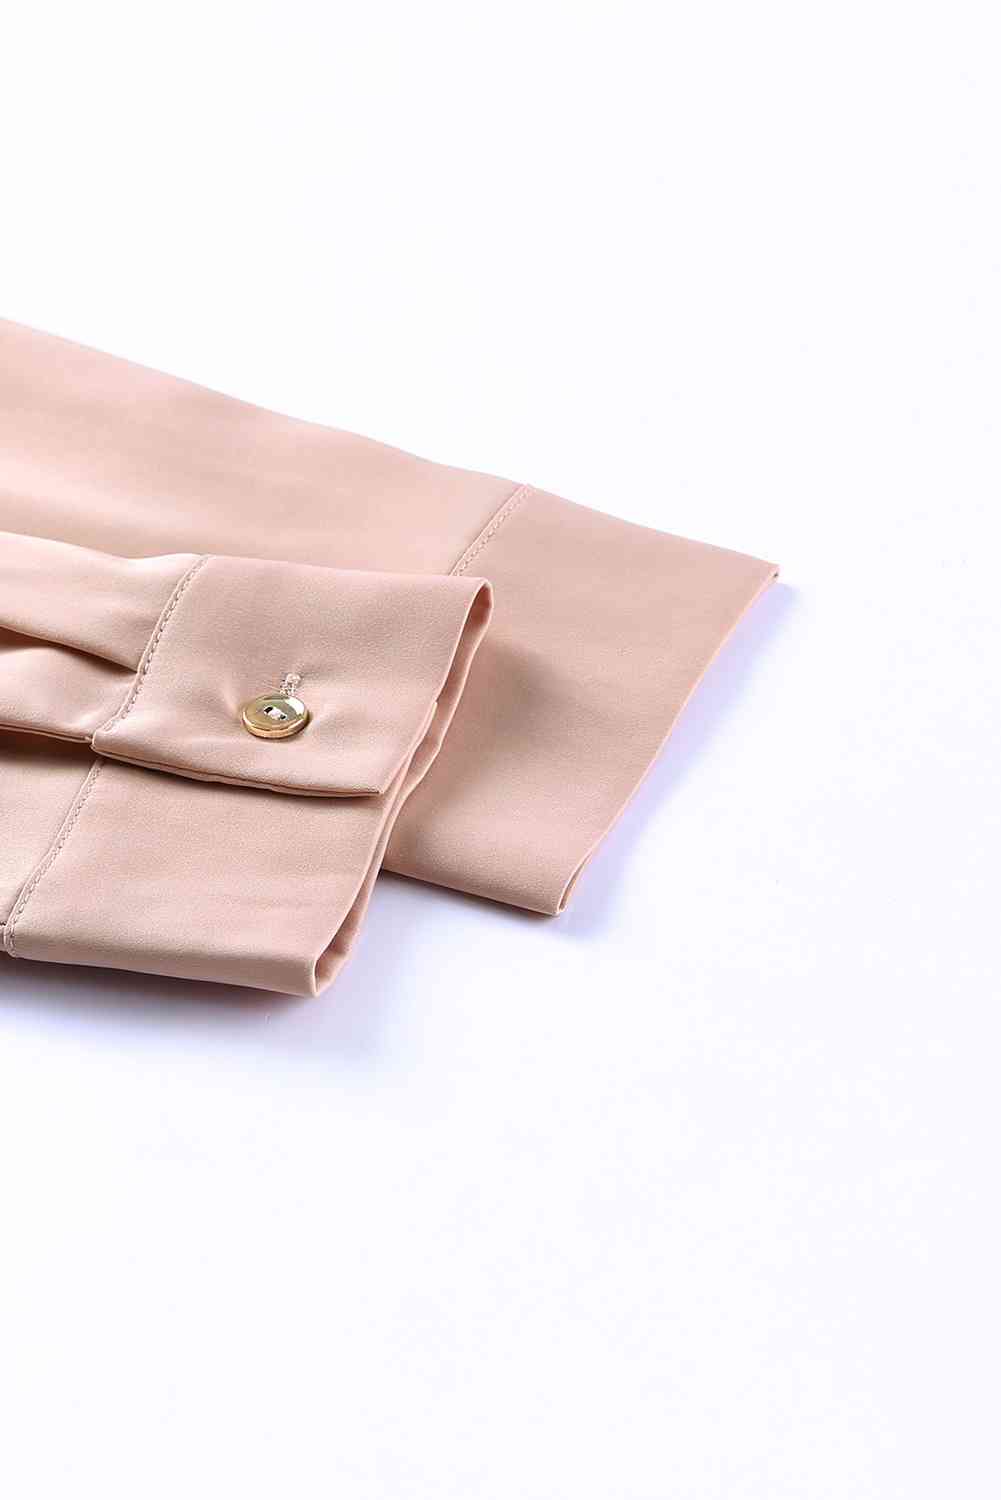 Sequin Button Front High-Low Shirt Dress - TiffanyzKlozet